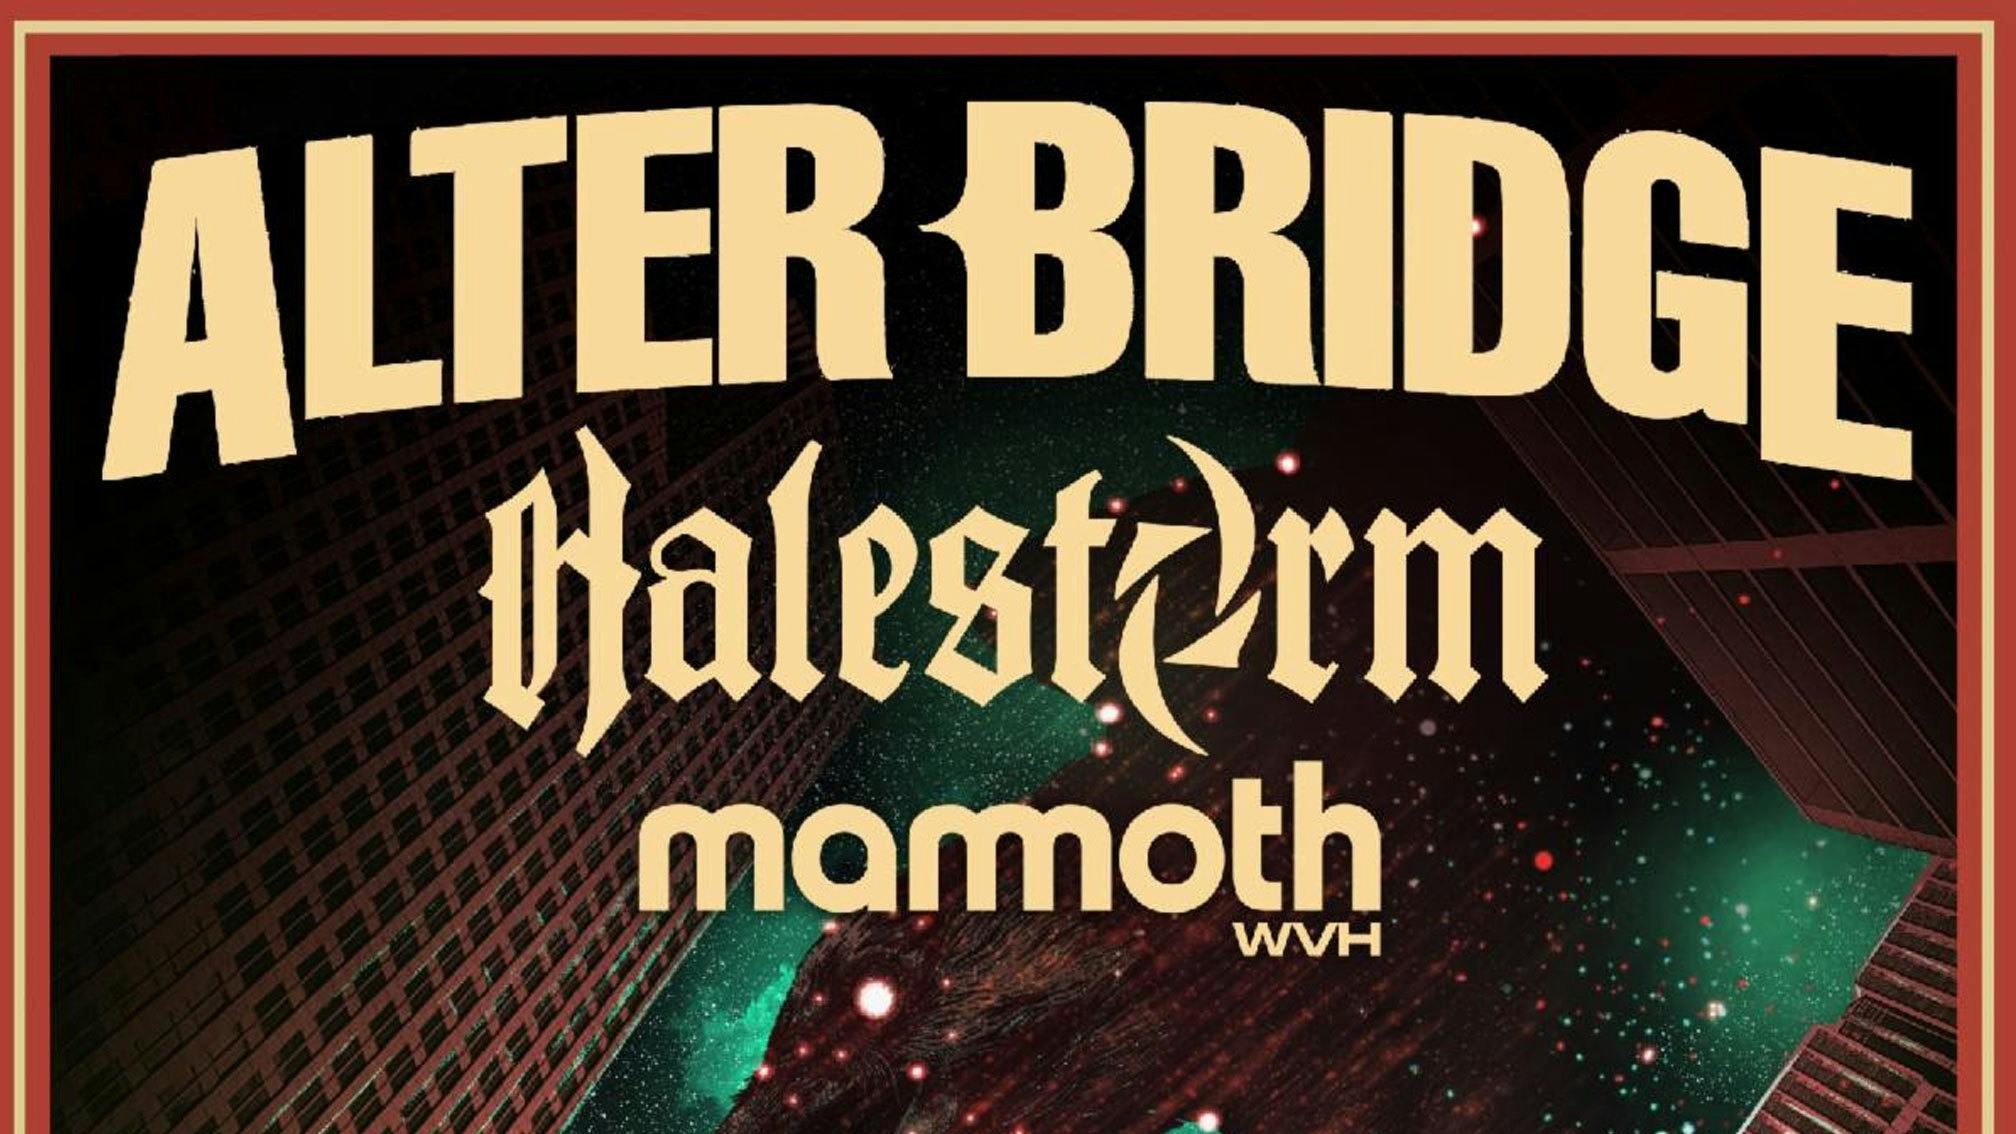 Alter Bridge announce huge European / UK tour with Halestorm, Mammoth WVH